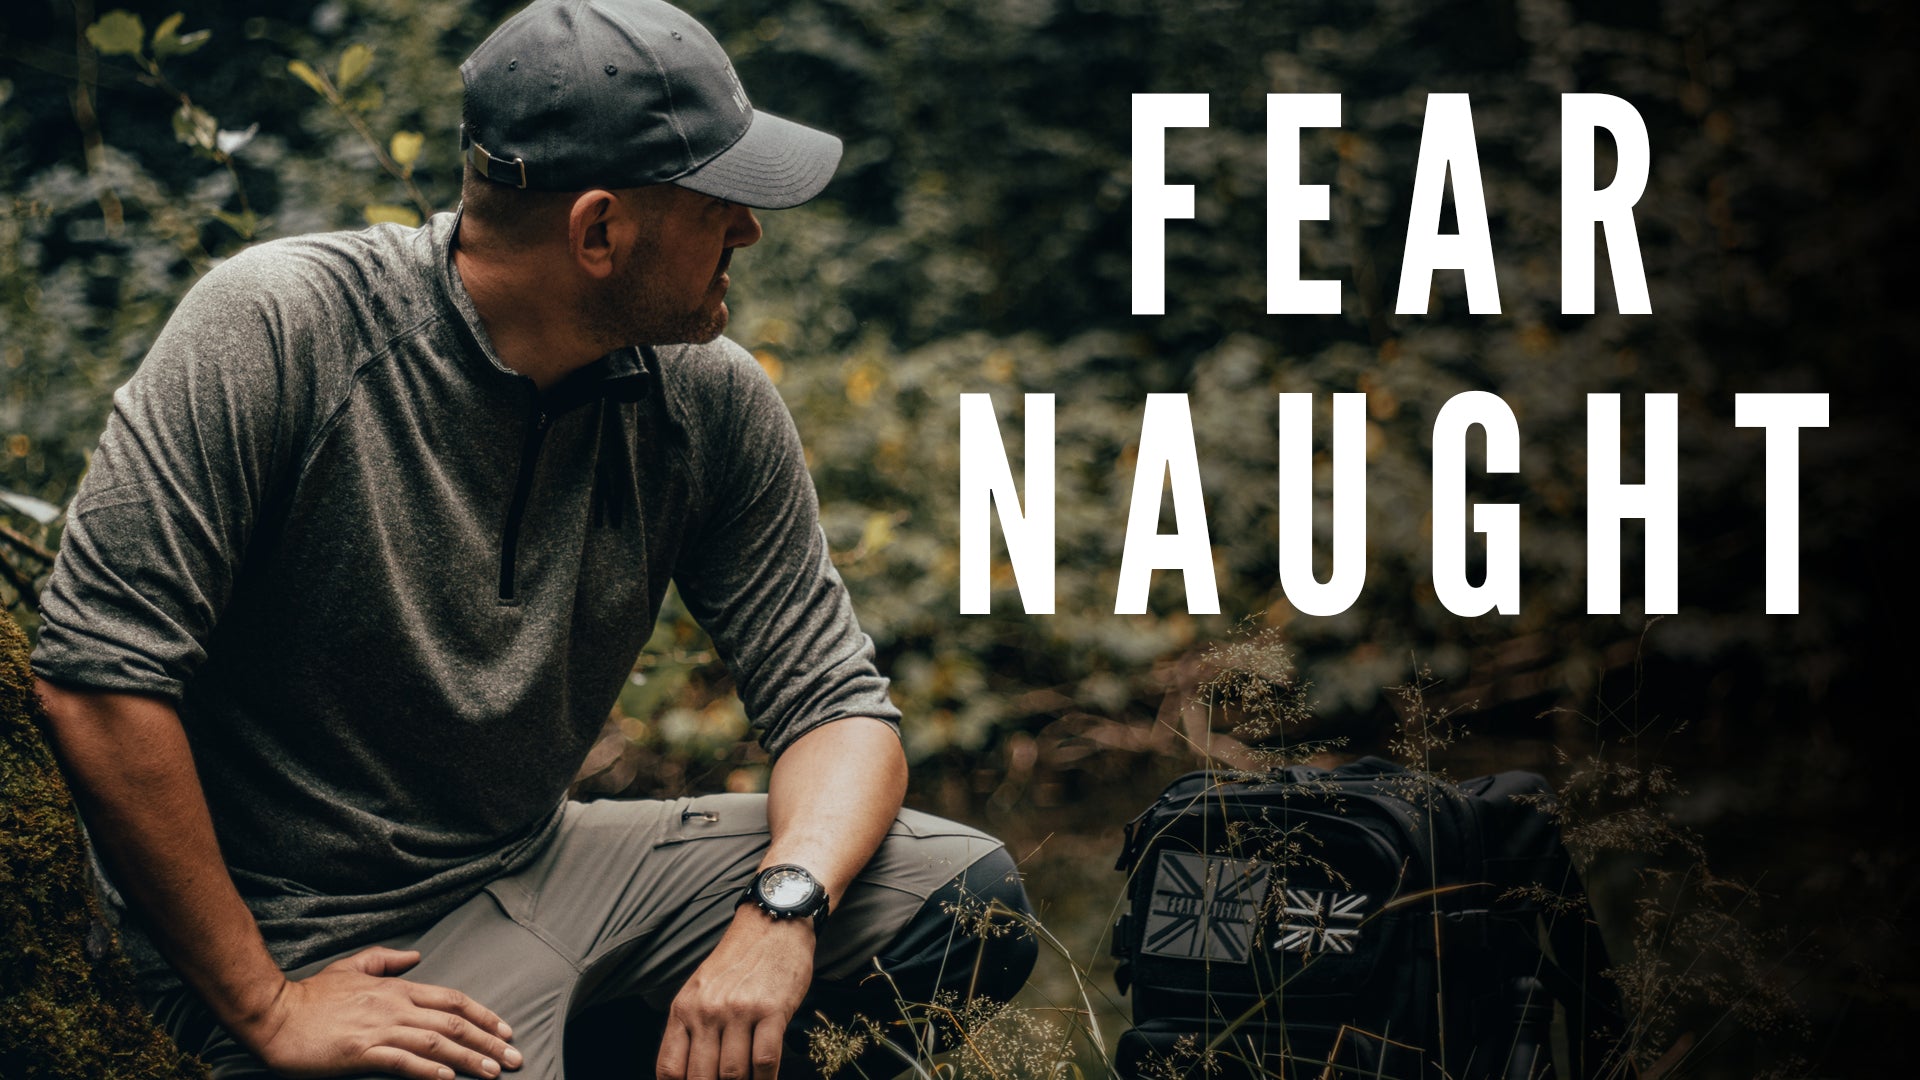 Load video: Fear Naught short film starring Jordan Wylie